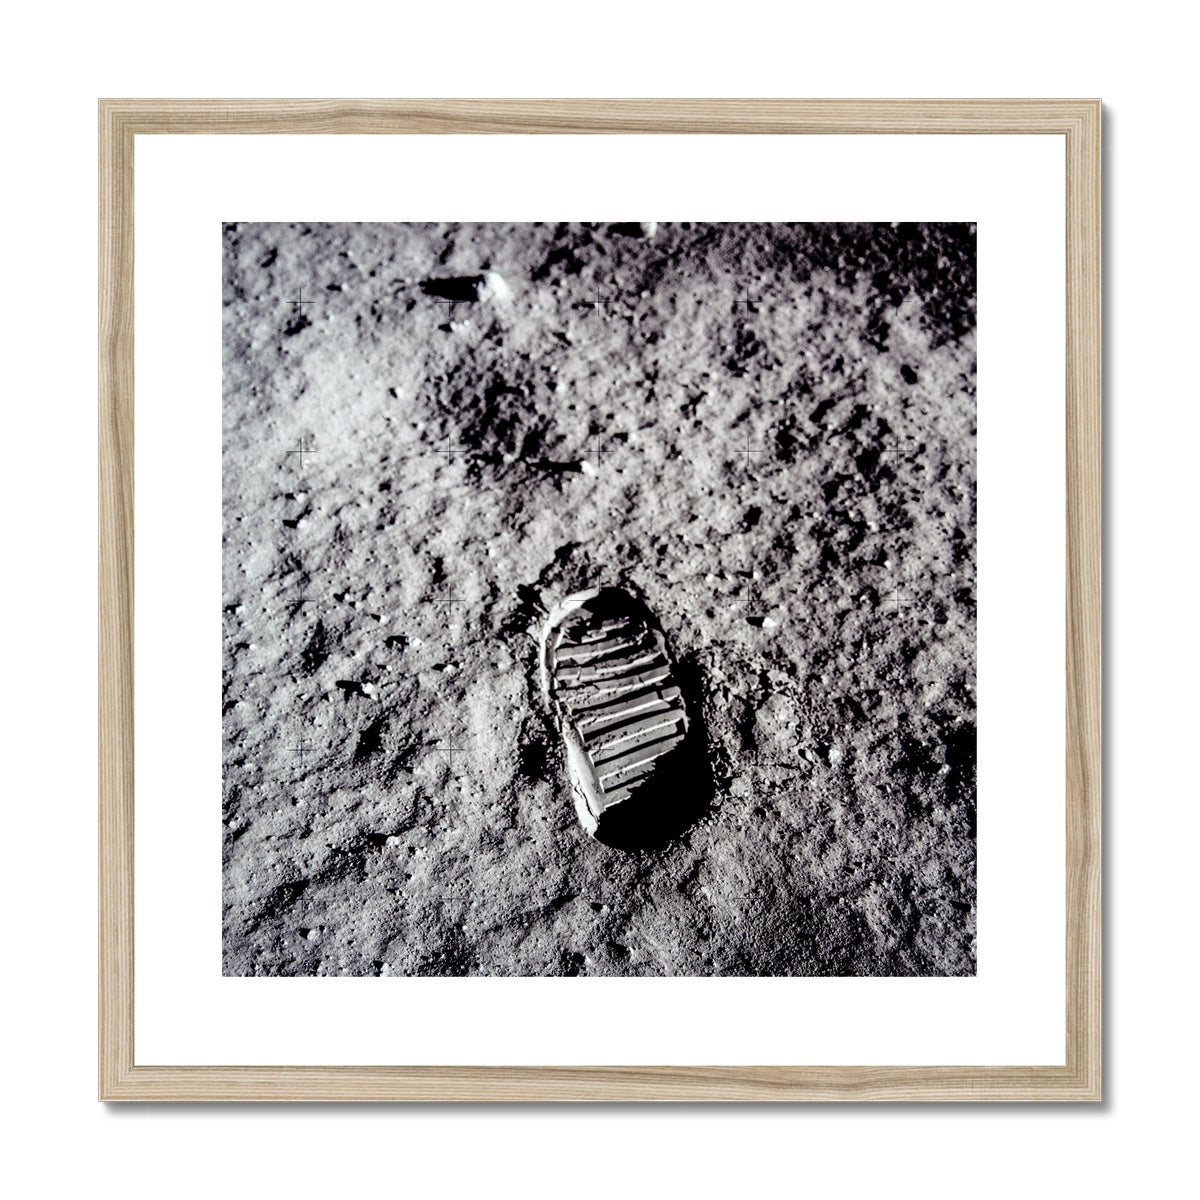 Aldrin's Footprint Framed & Mounted Print